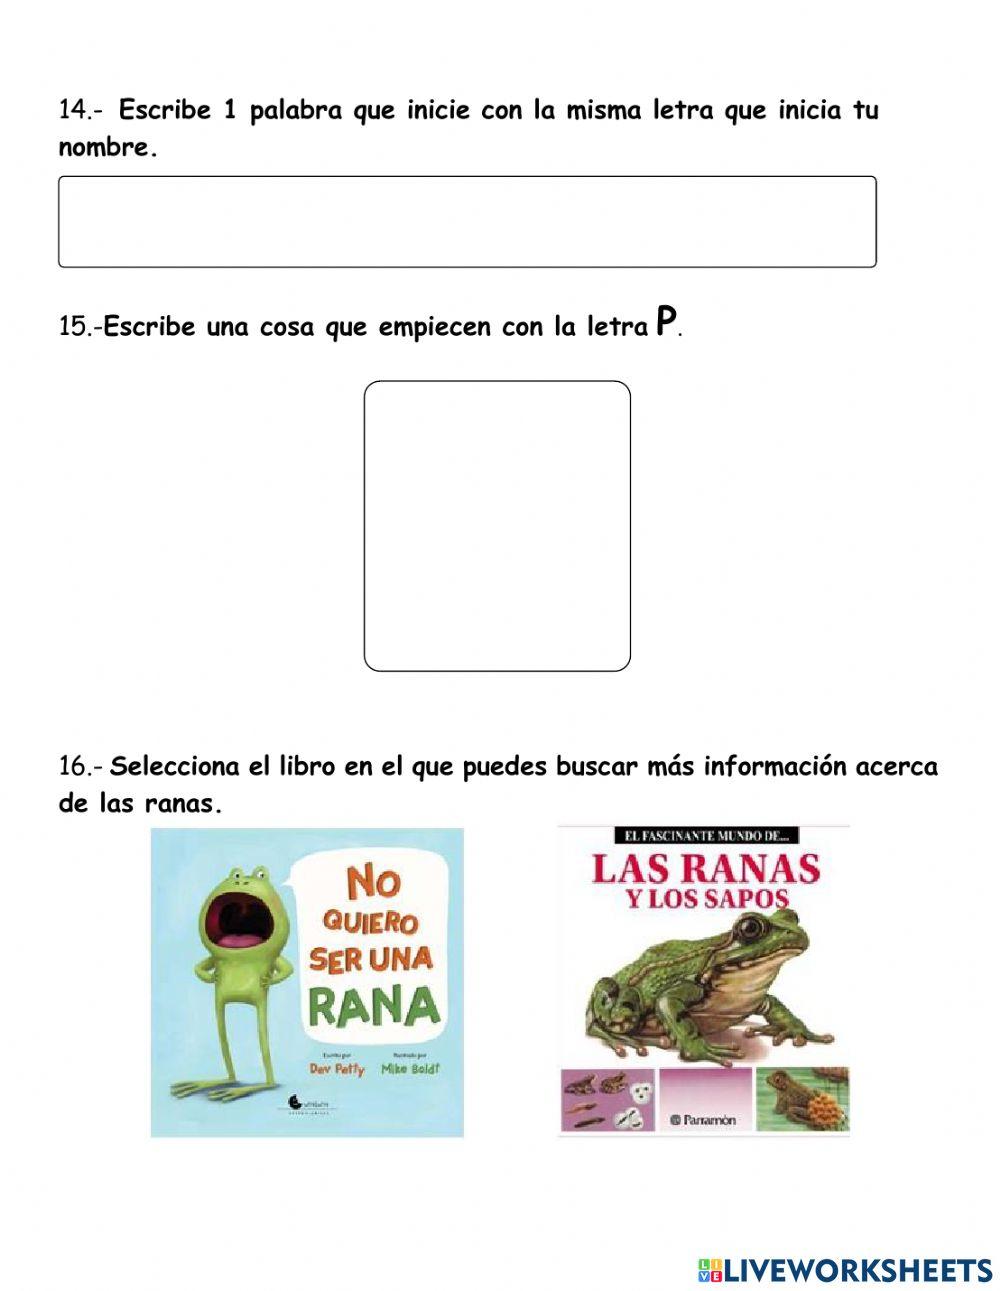 1°-Examen trimestral. Lengua Materna. Español.